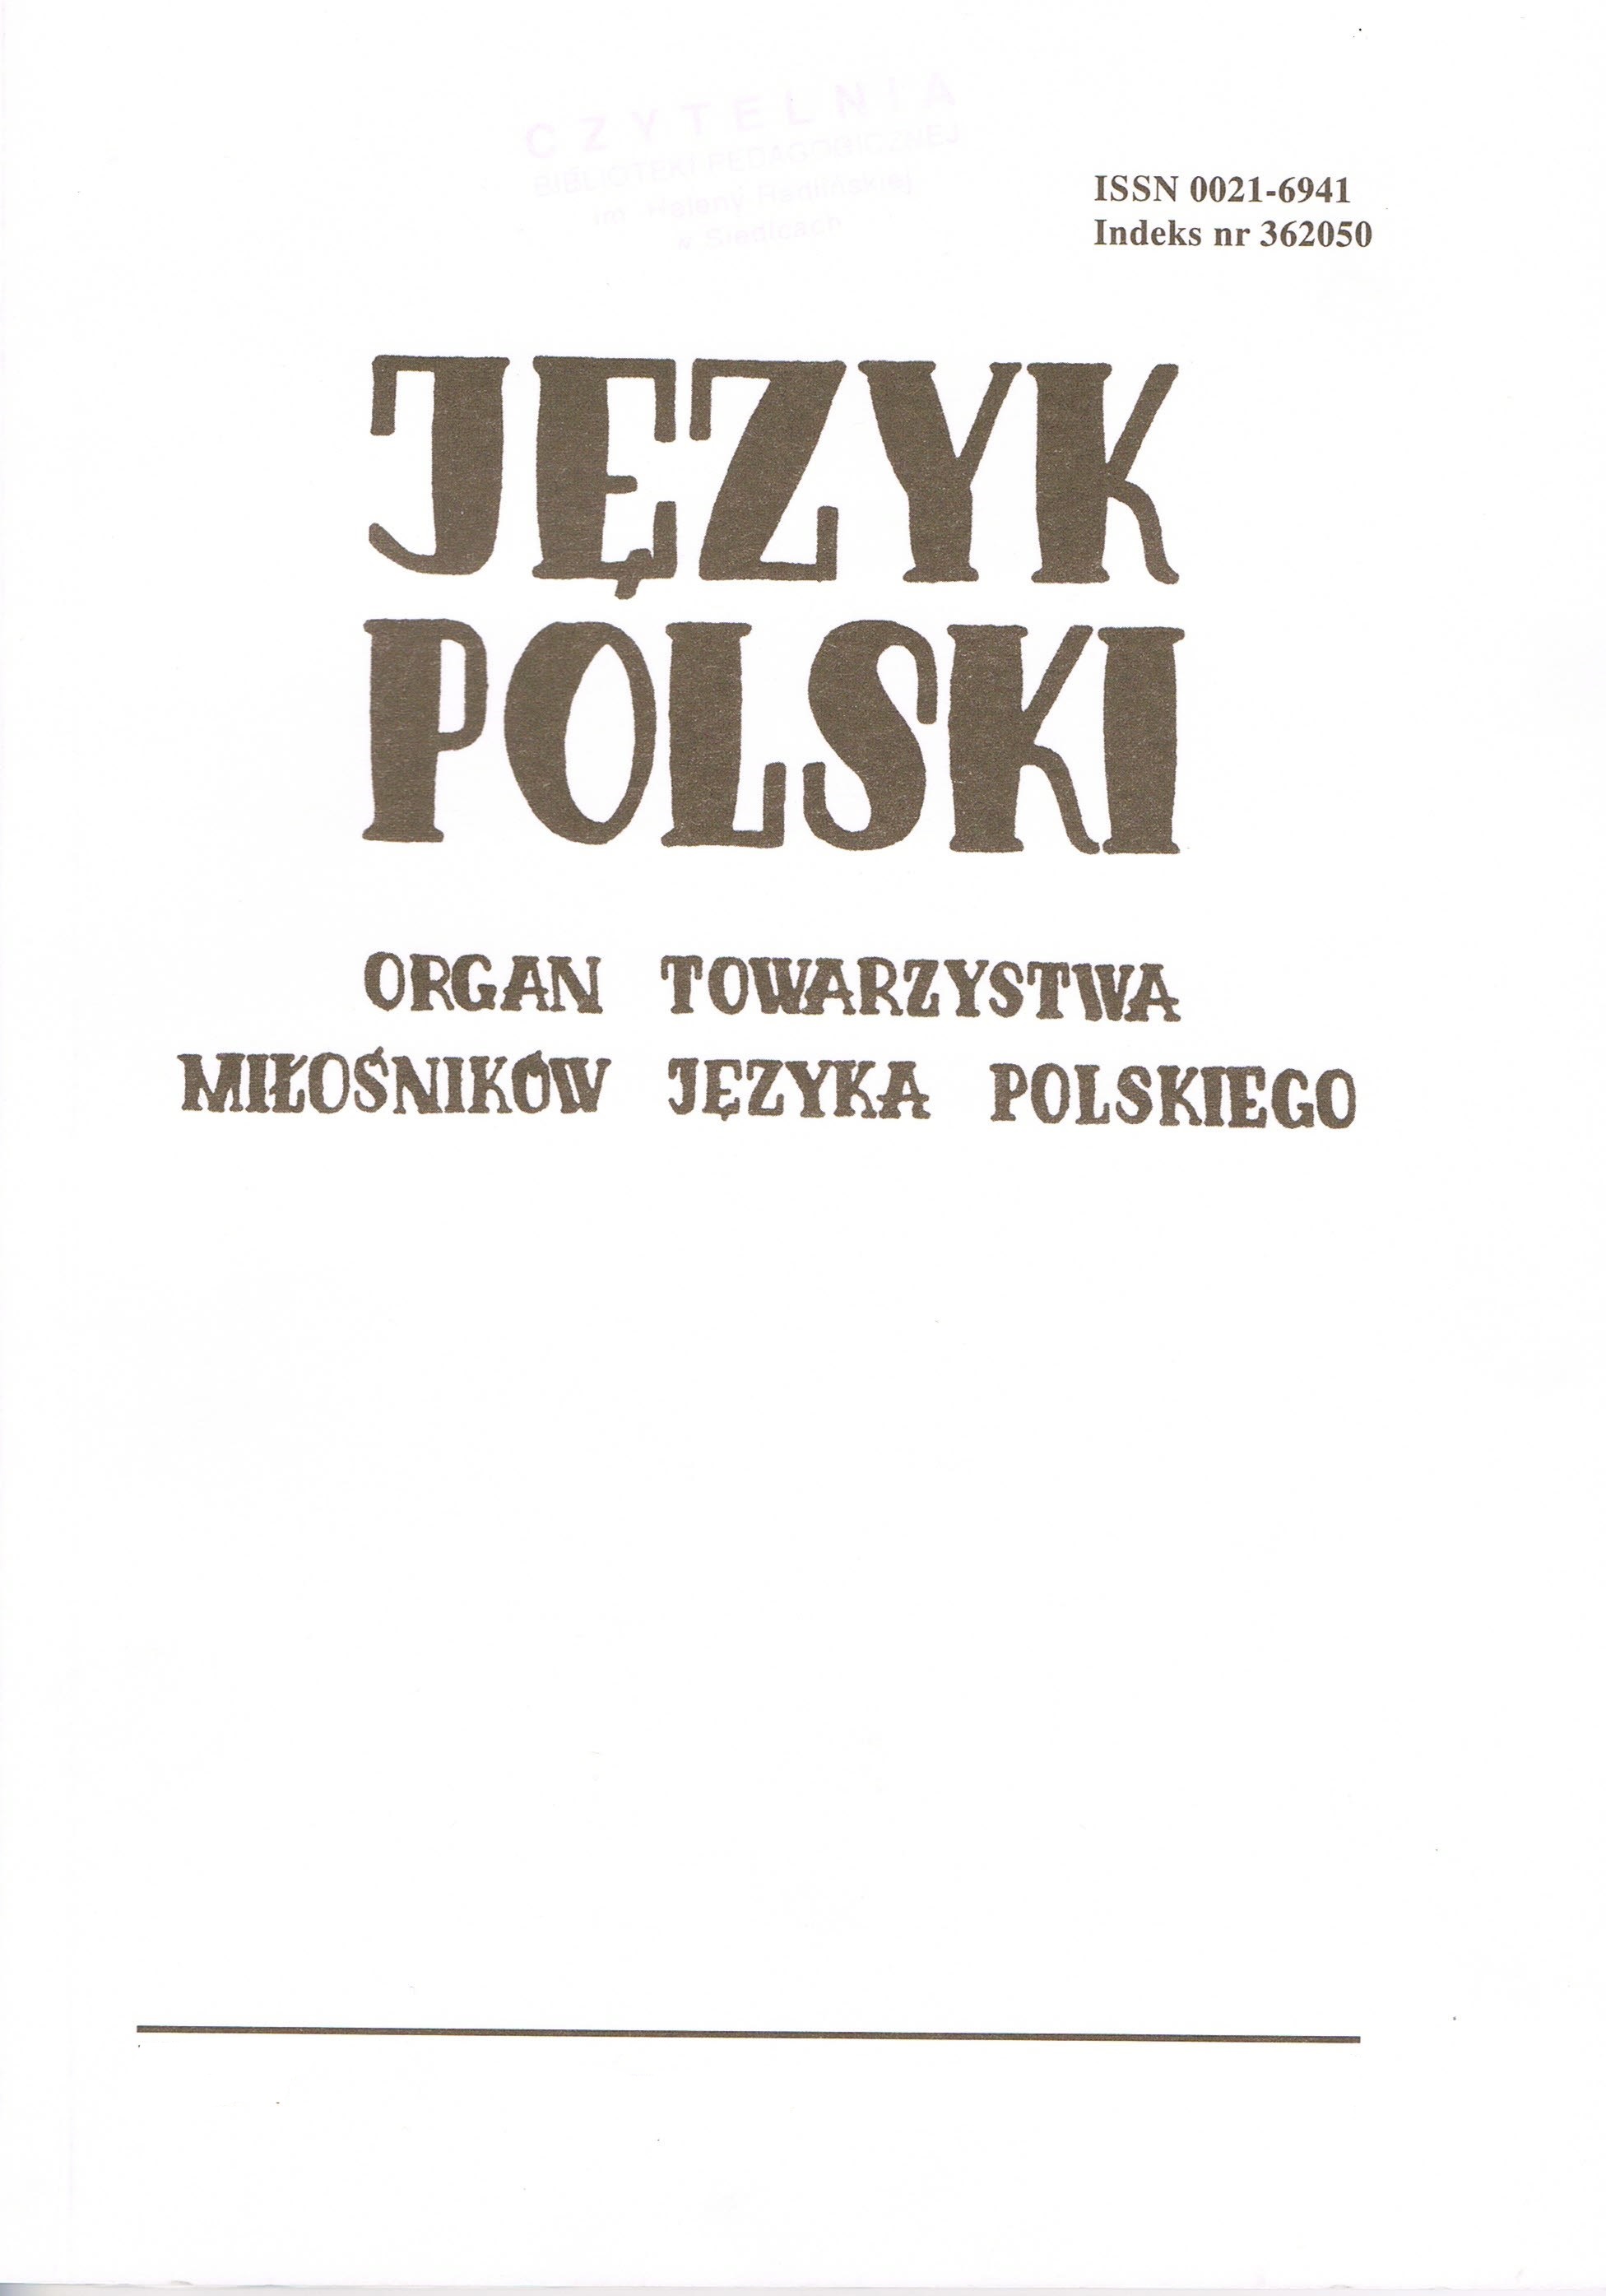 About Professor Walery Pisarek  Cover Image